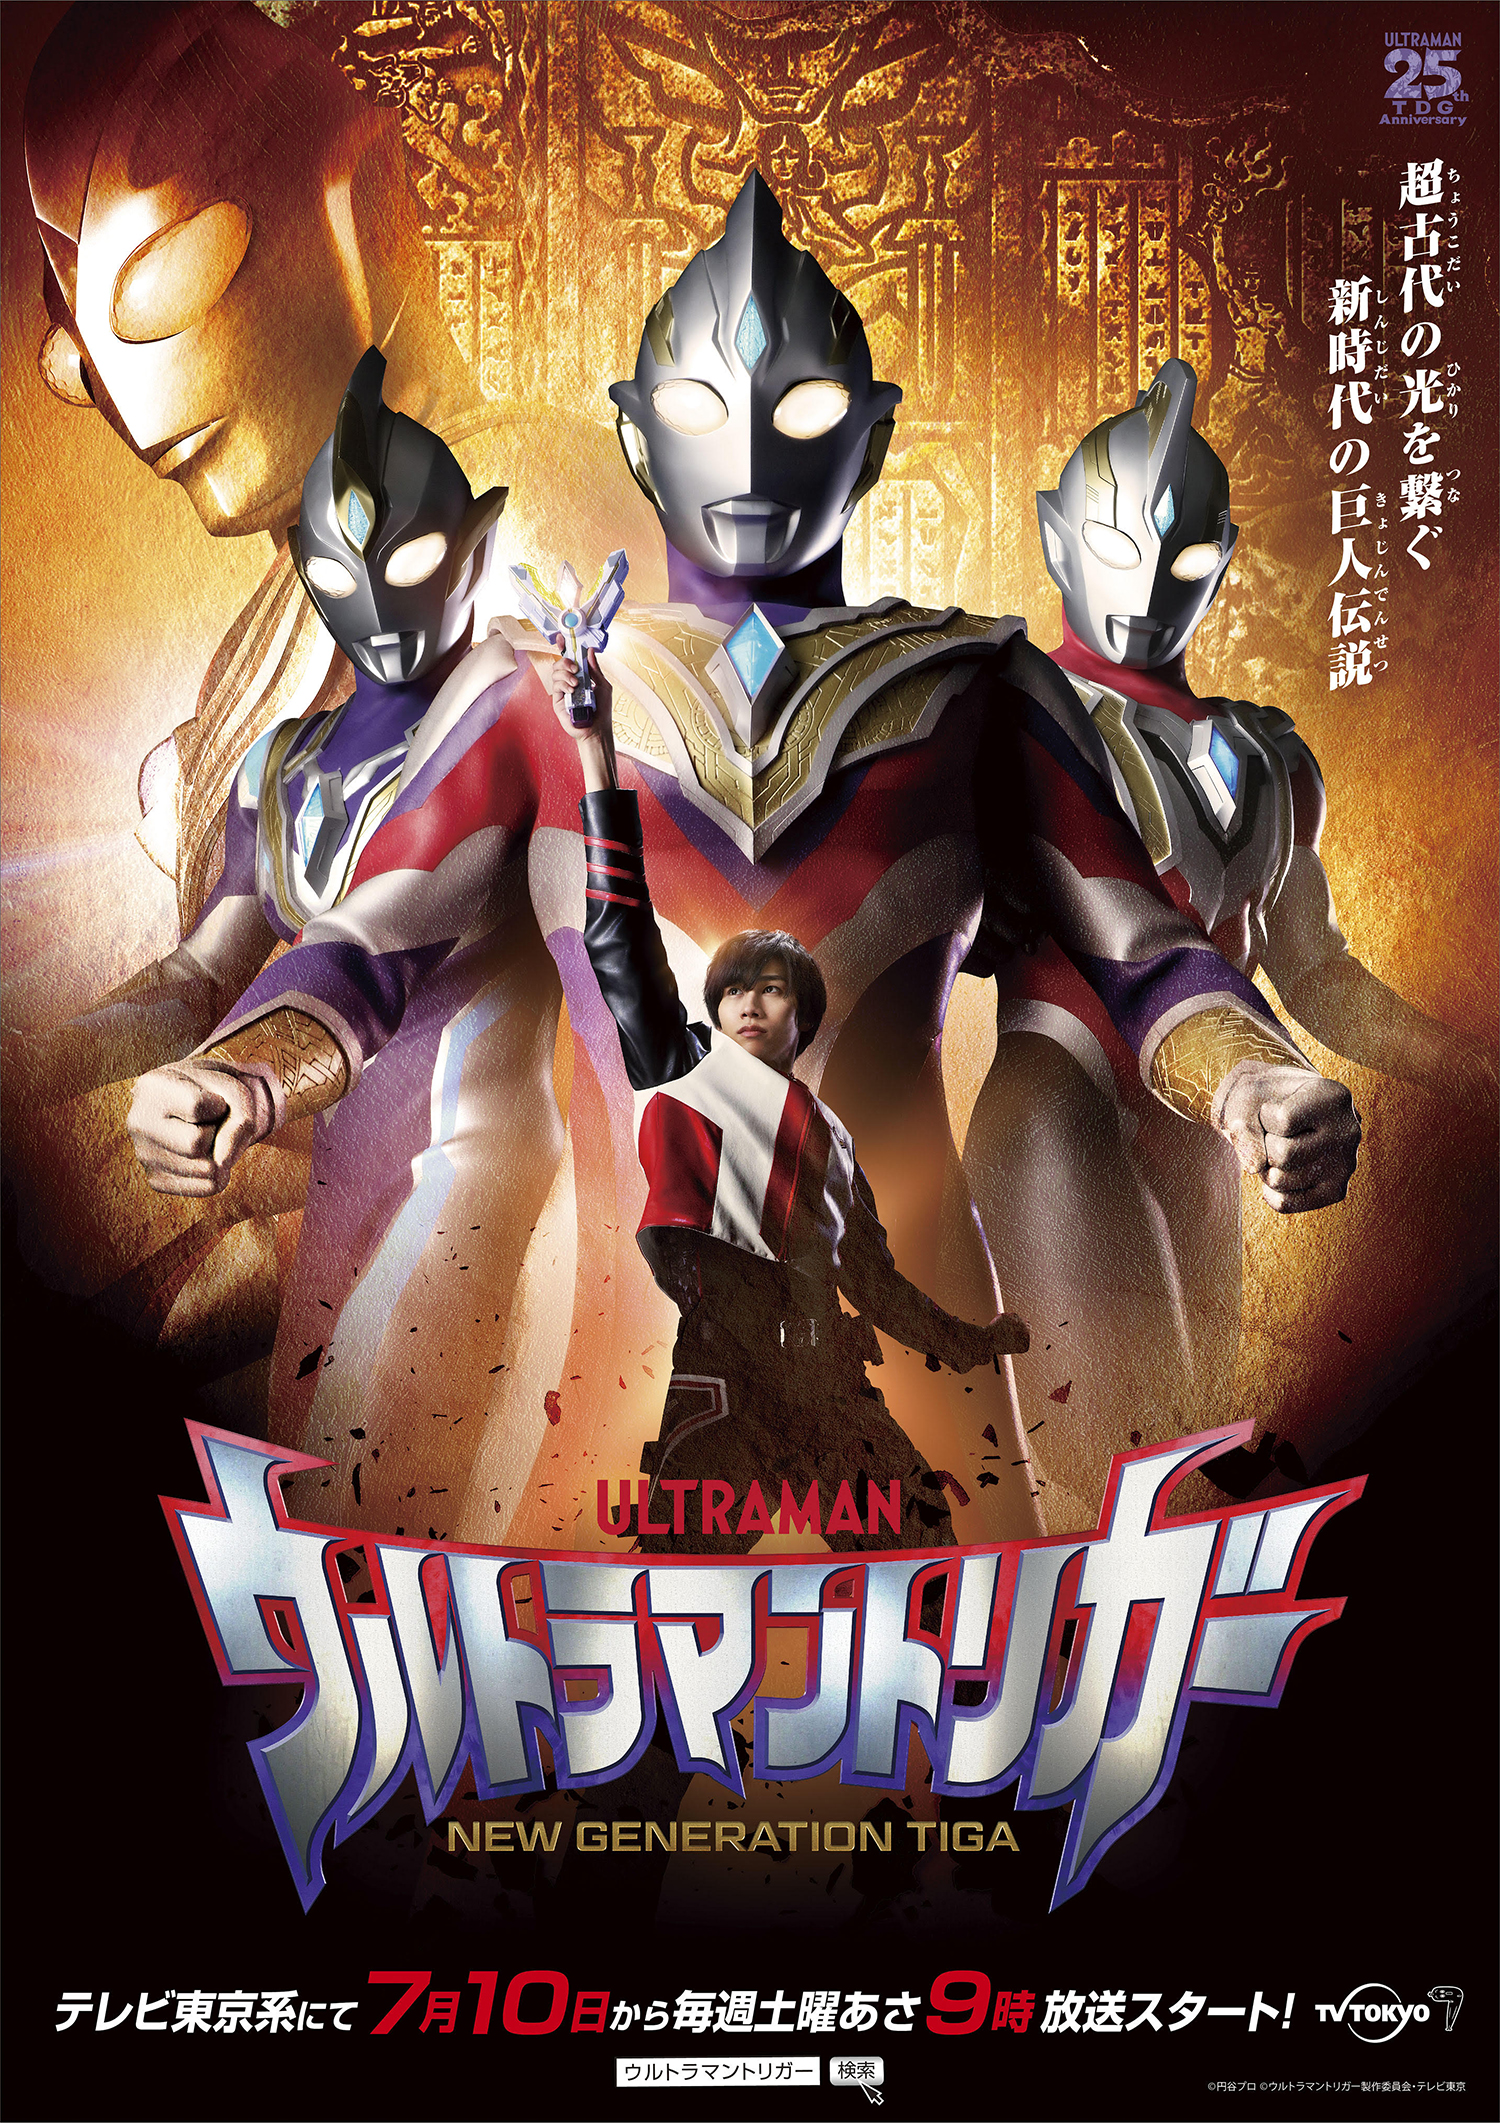 Tokyo Revengers (TV Series 2021- ) - Elenco & Equipe — The Movie